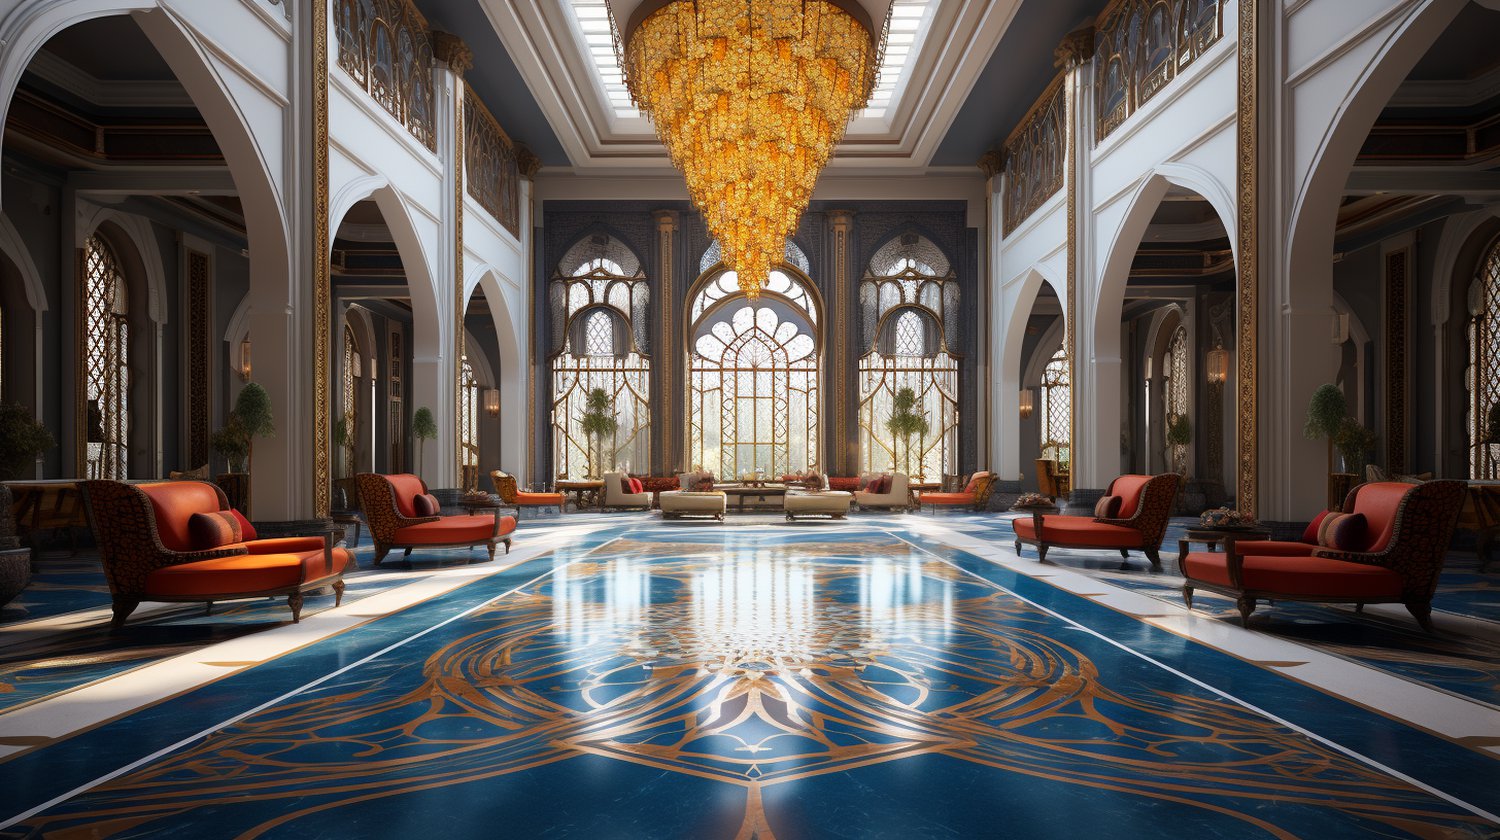 Opulent Art Deco interior design with AI-influenced artwork and Midjourney